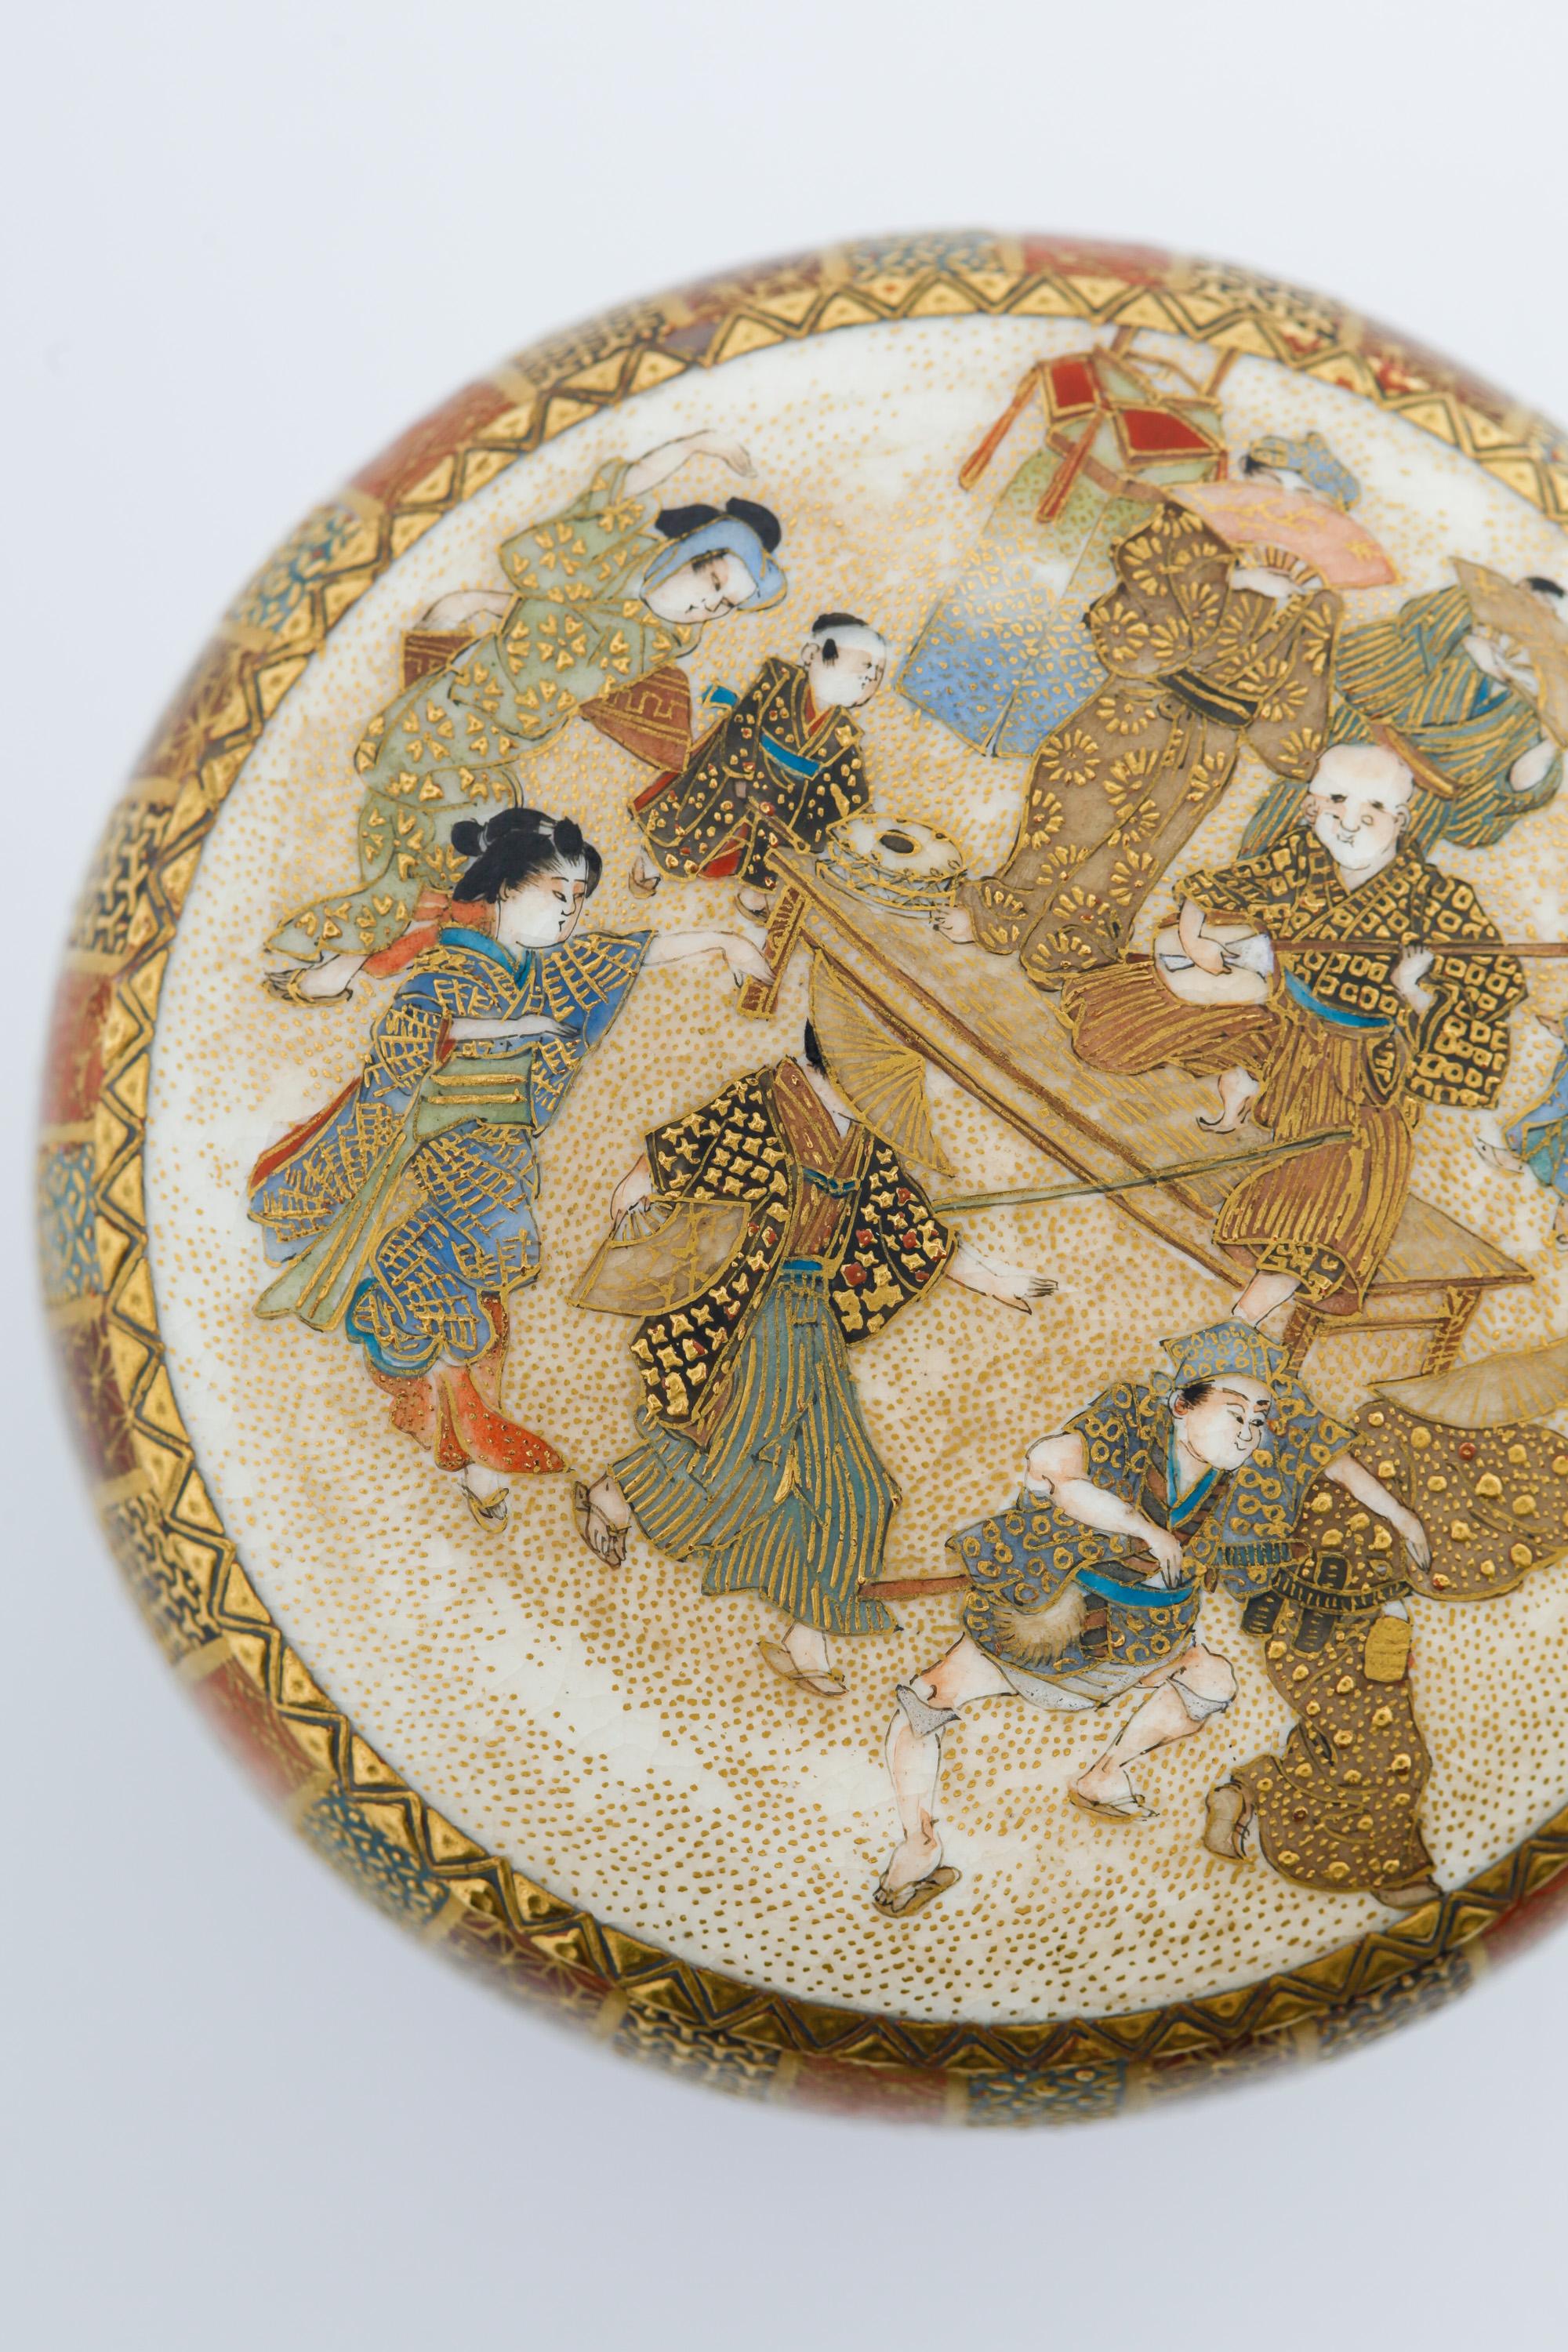 19th Century Satsuma, Tea Caddy, Meiji Period, Antique Japanese Porcelain, Japanese Ceramics